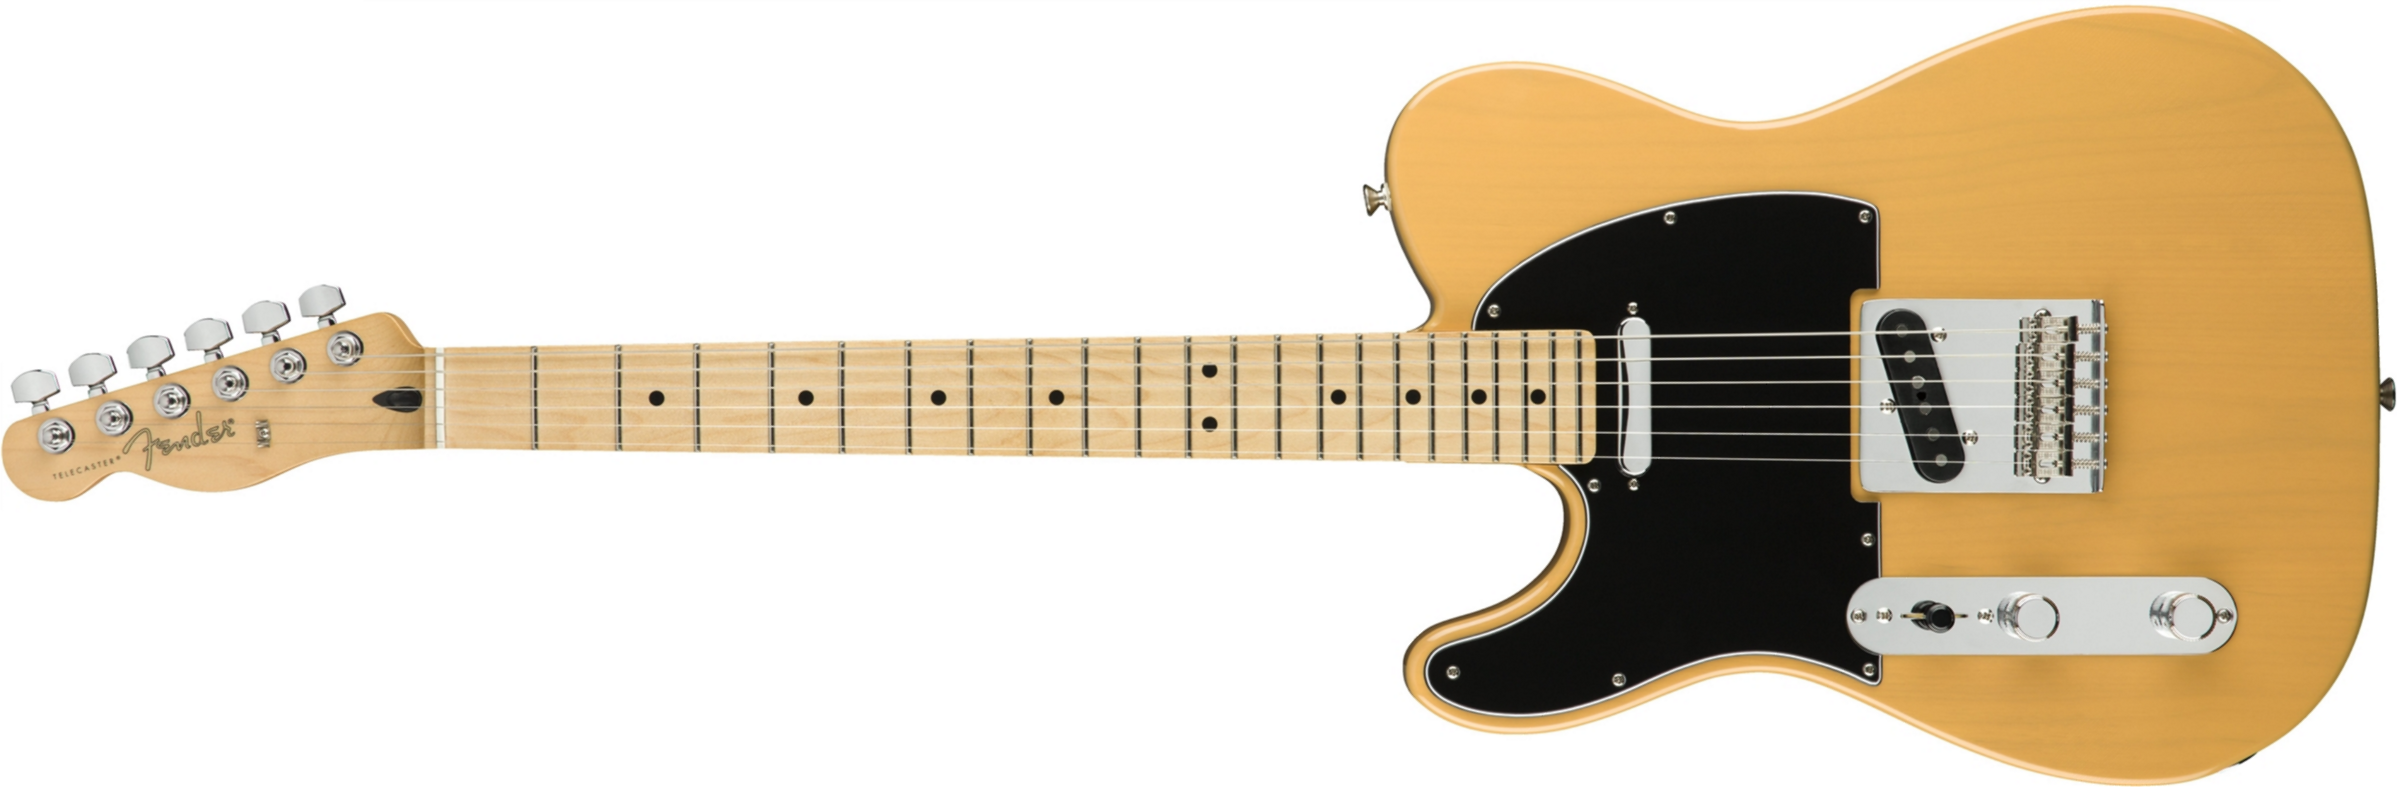 Fender Tele Player Lh Gaucher Mex 2s Mn - Butterscotch Blonde - Guitarra electrica para zurdos - Main picture